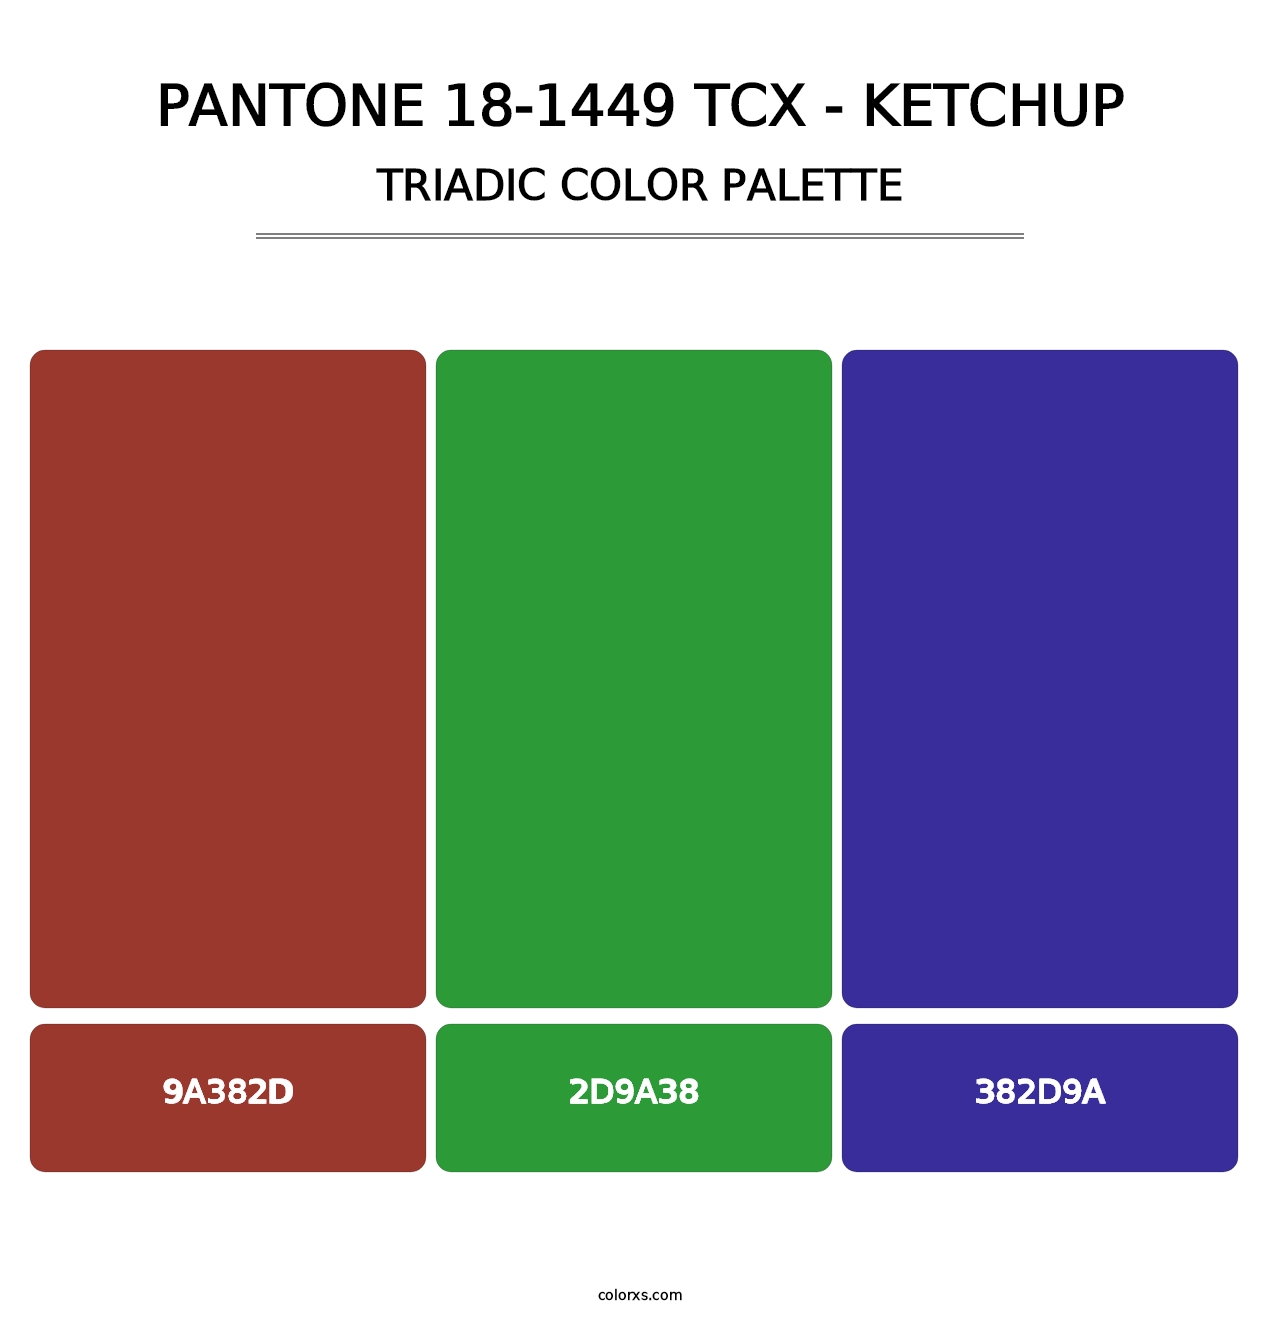 PANTONE 18-1449 TCX - Ketchup - Triadic Color Palette